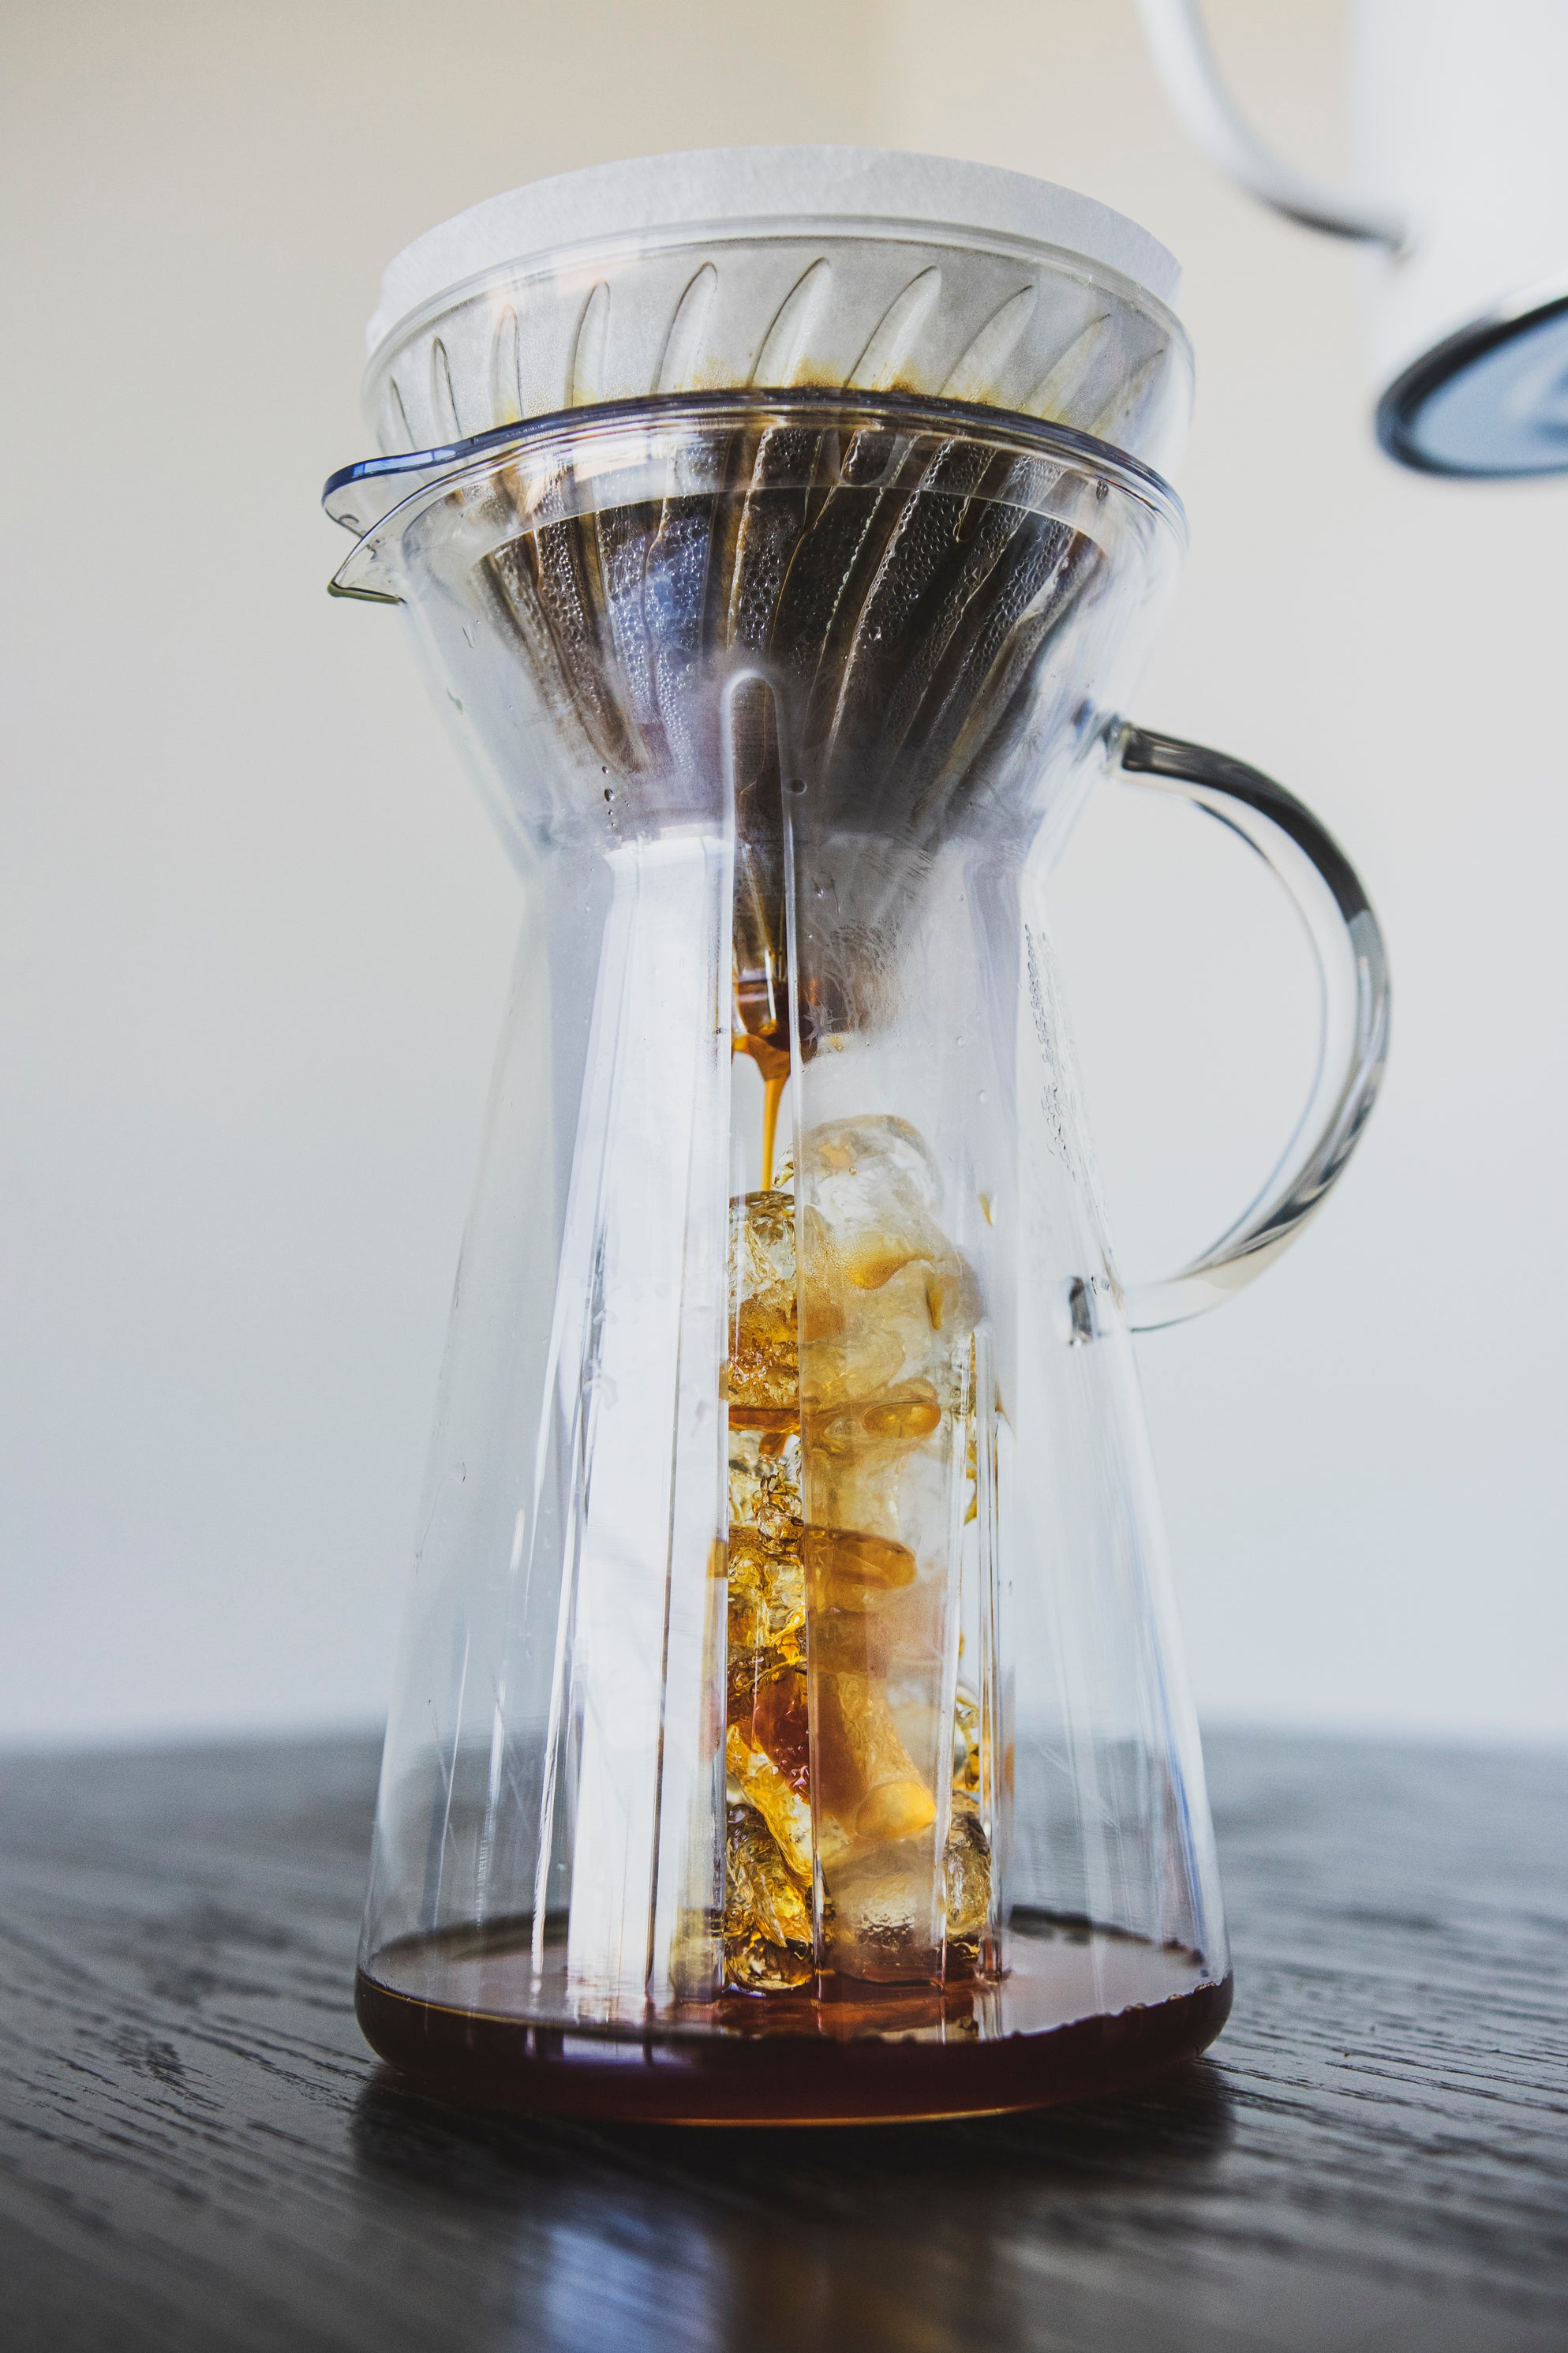 V60 Hot and Iced Glass Coffee Maker – Hario USA